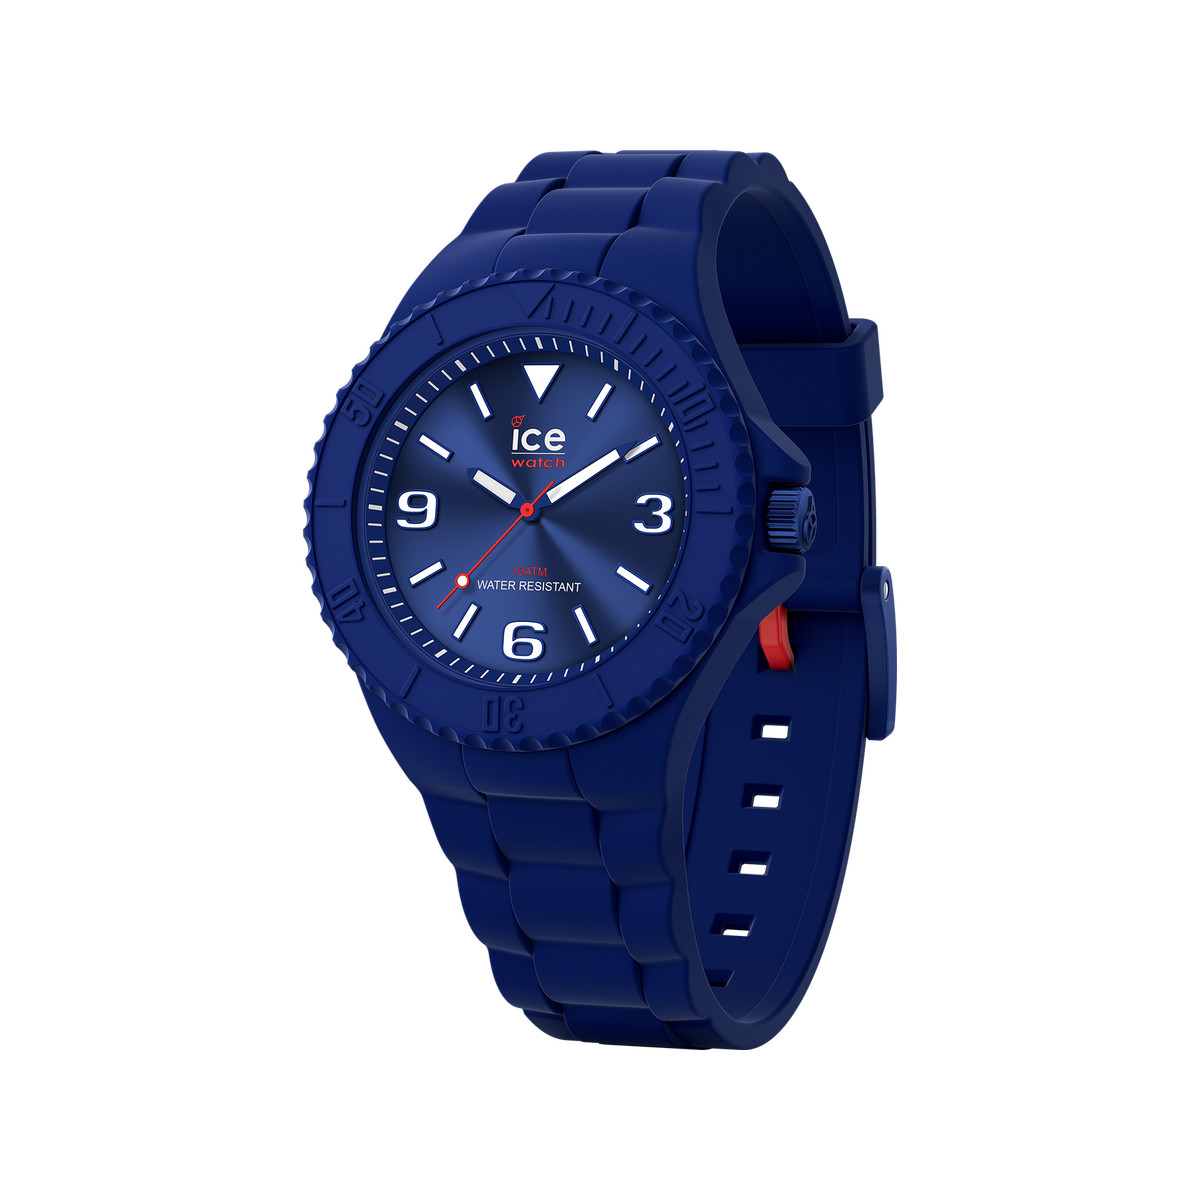 Montre Ice Watch medium mixte plastique silicone bleu - vue 4